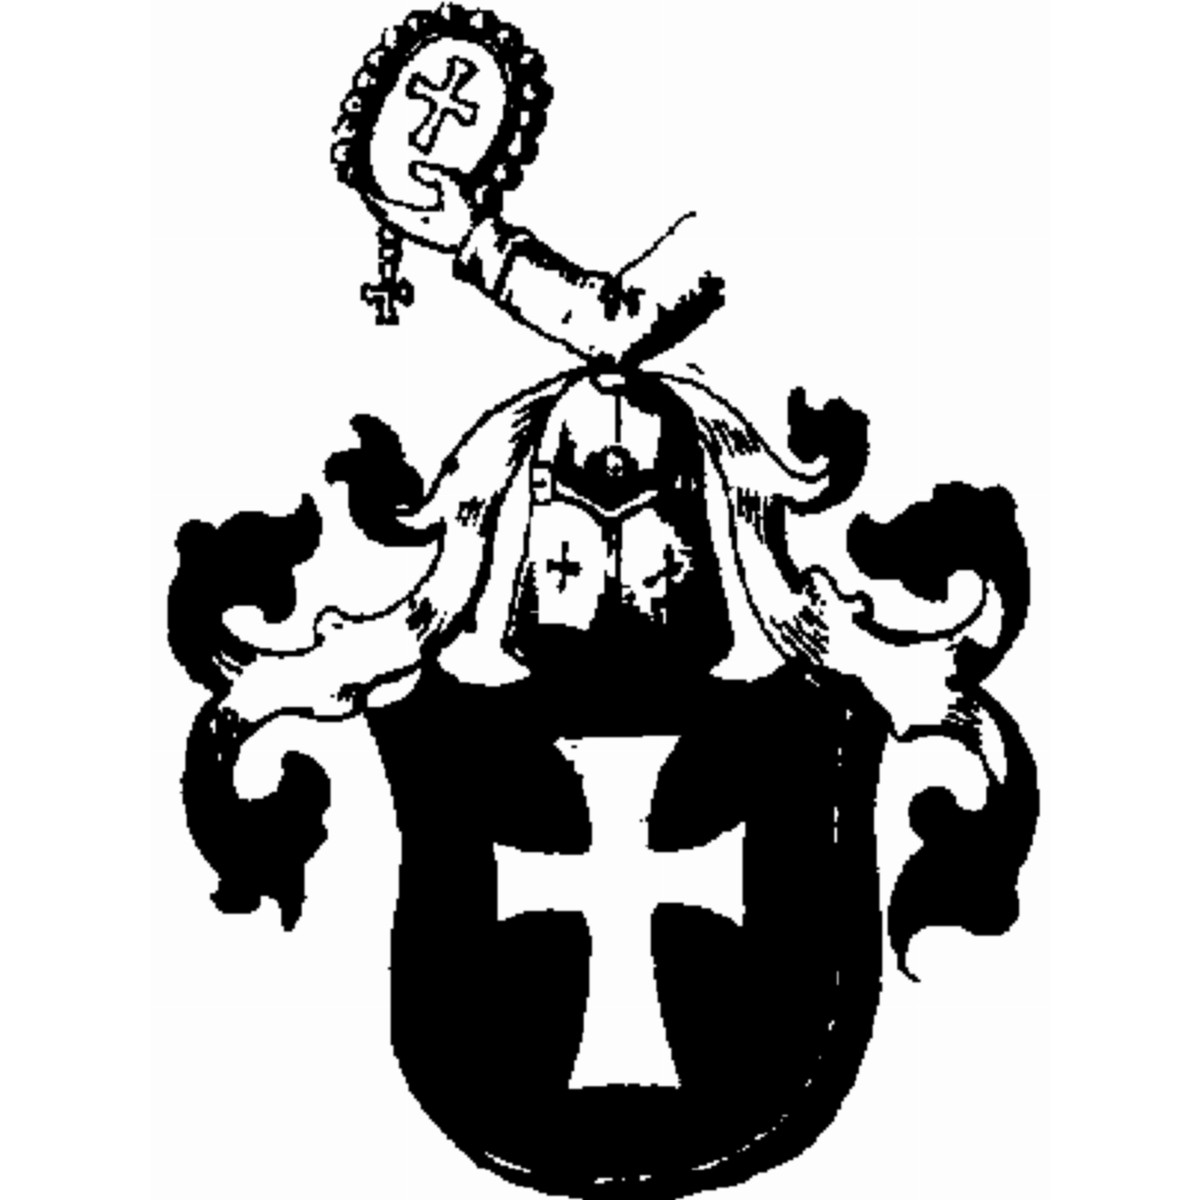 Wappen der Familie Durand